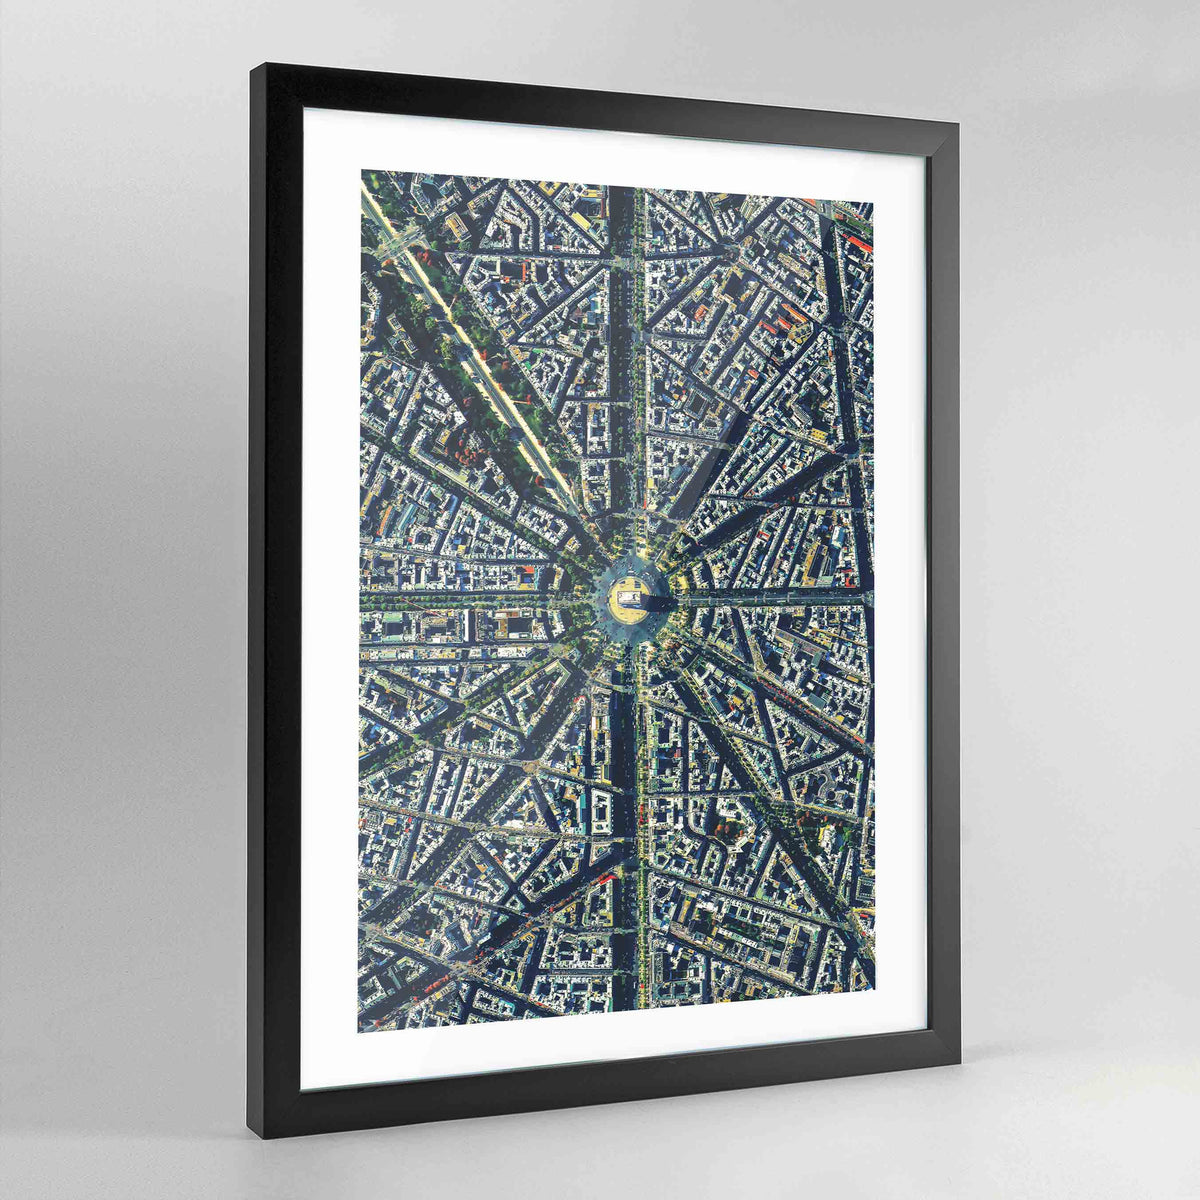 Arc de Triomphe Earth Photography Art Print - Framed